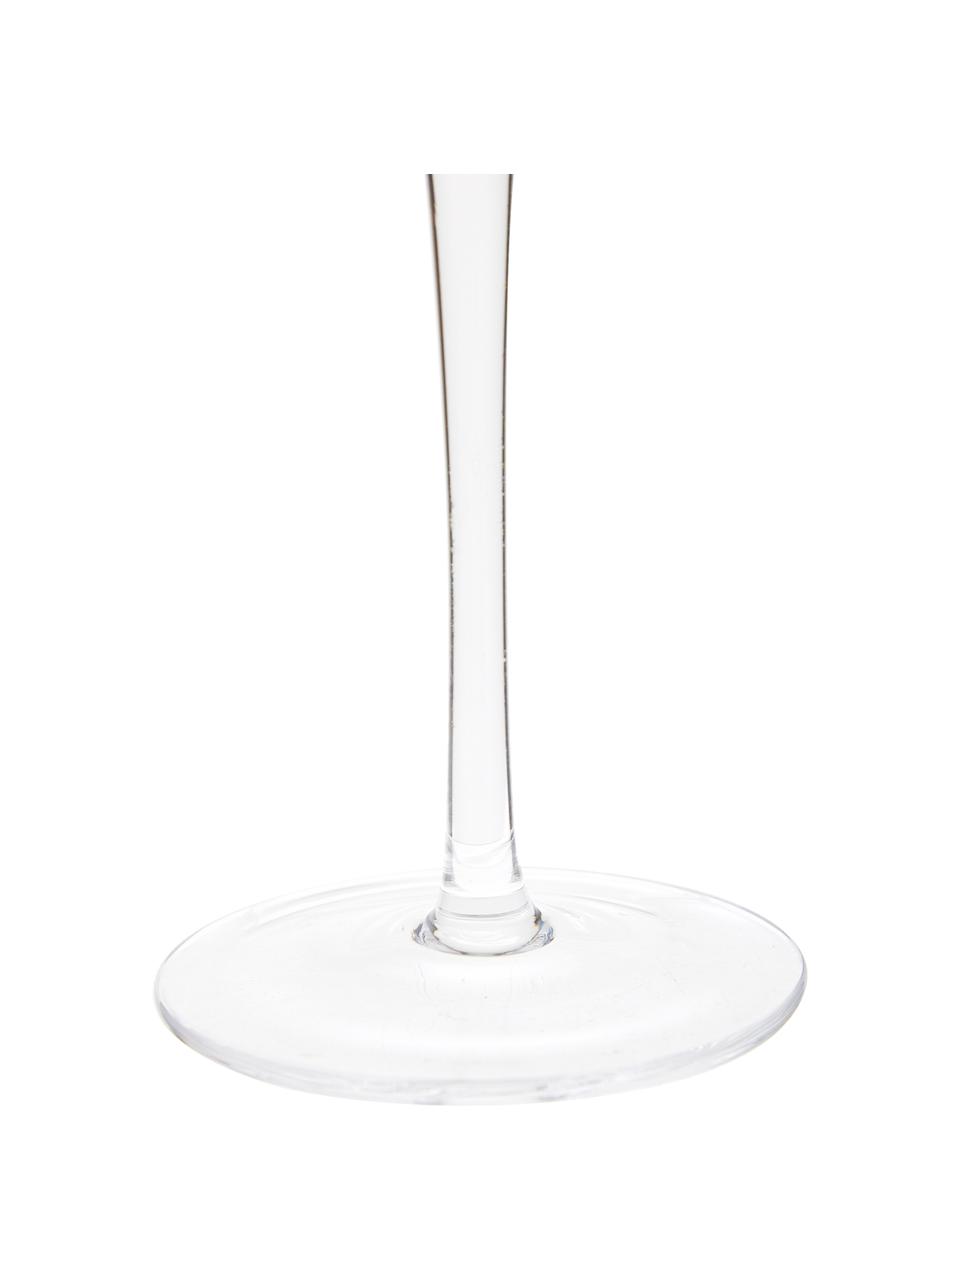 Mondgeblazen witte wijnglazen Ays, 4 stuks, Glas, Transparant, Ø 6 x H 24 cm, 418 ml